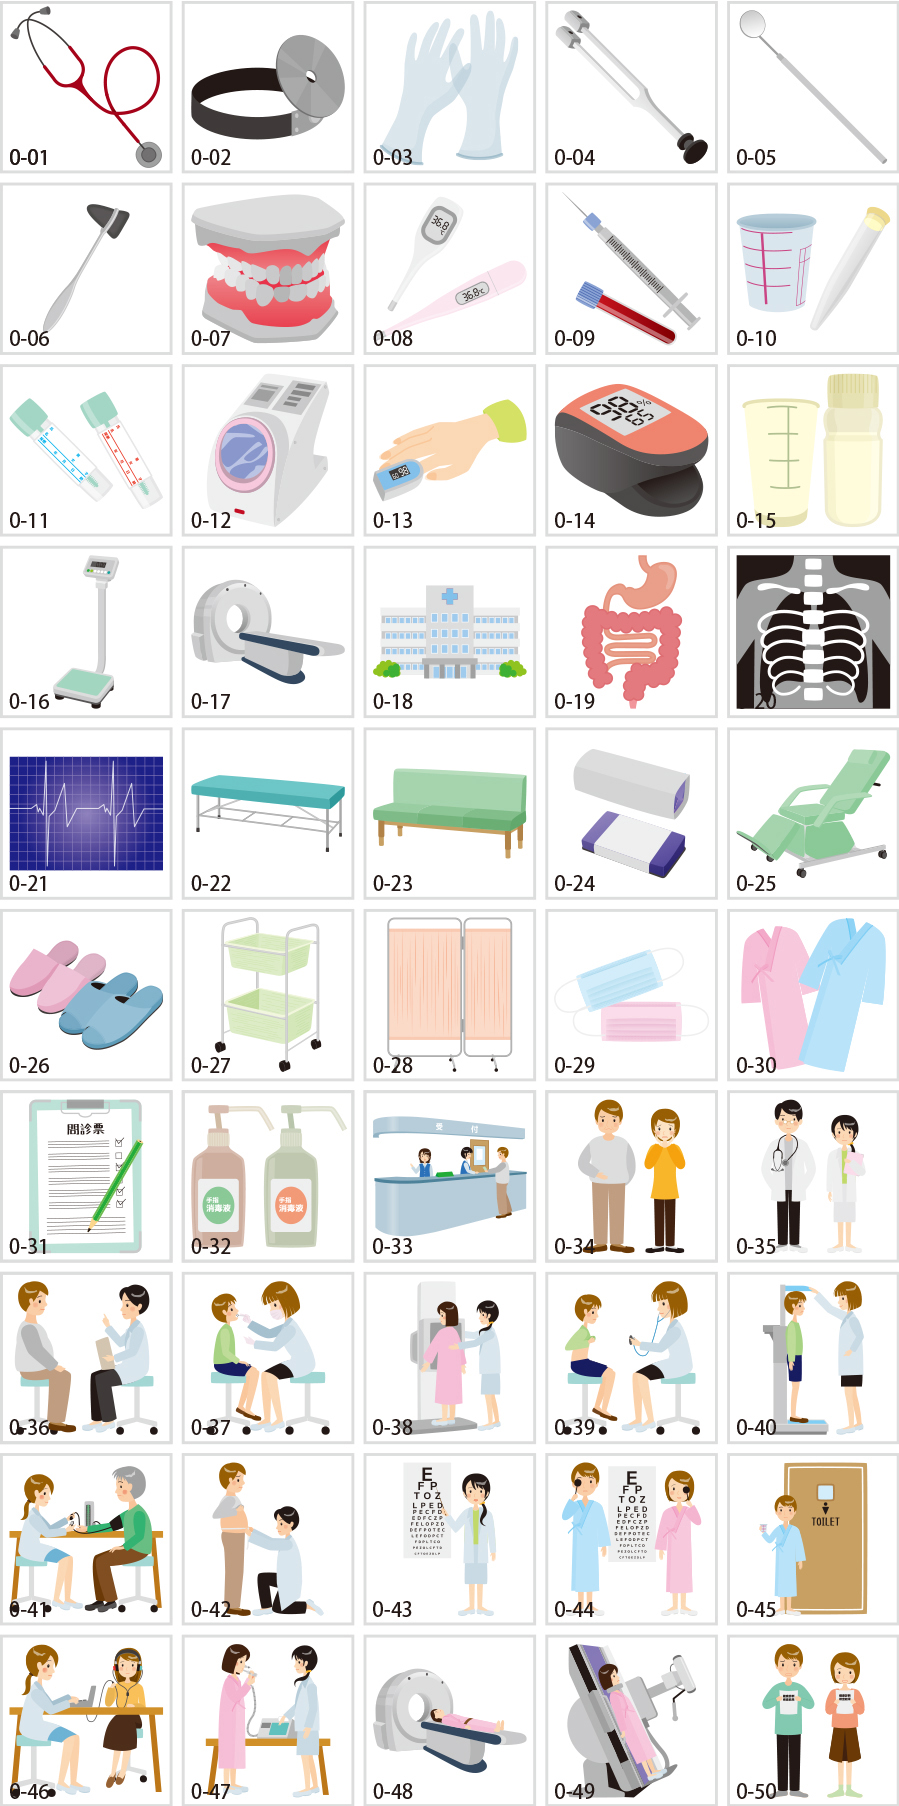 Illustration material for medical examination